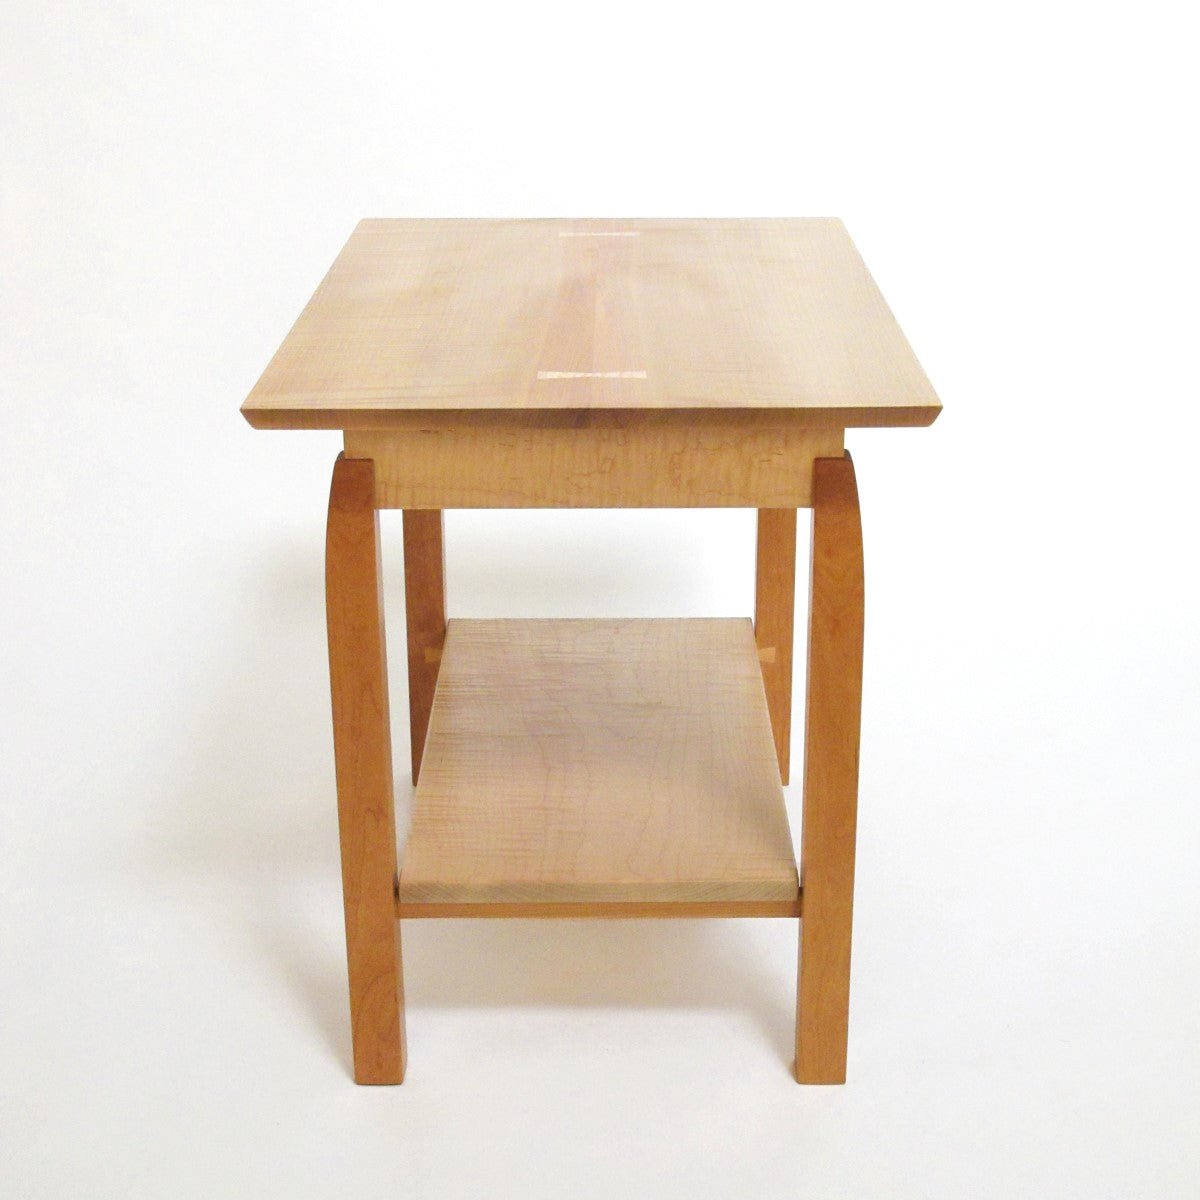 A narrow handmade side table from Mokuzai Furniture.